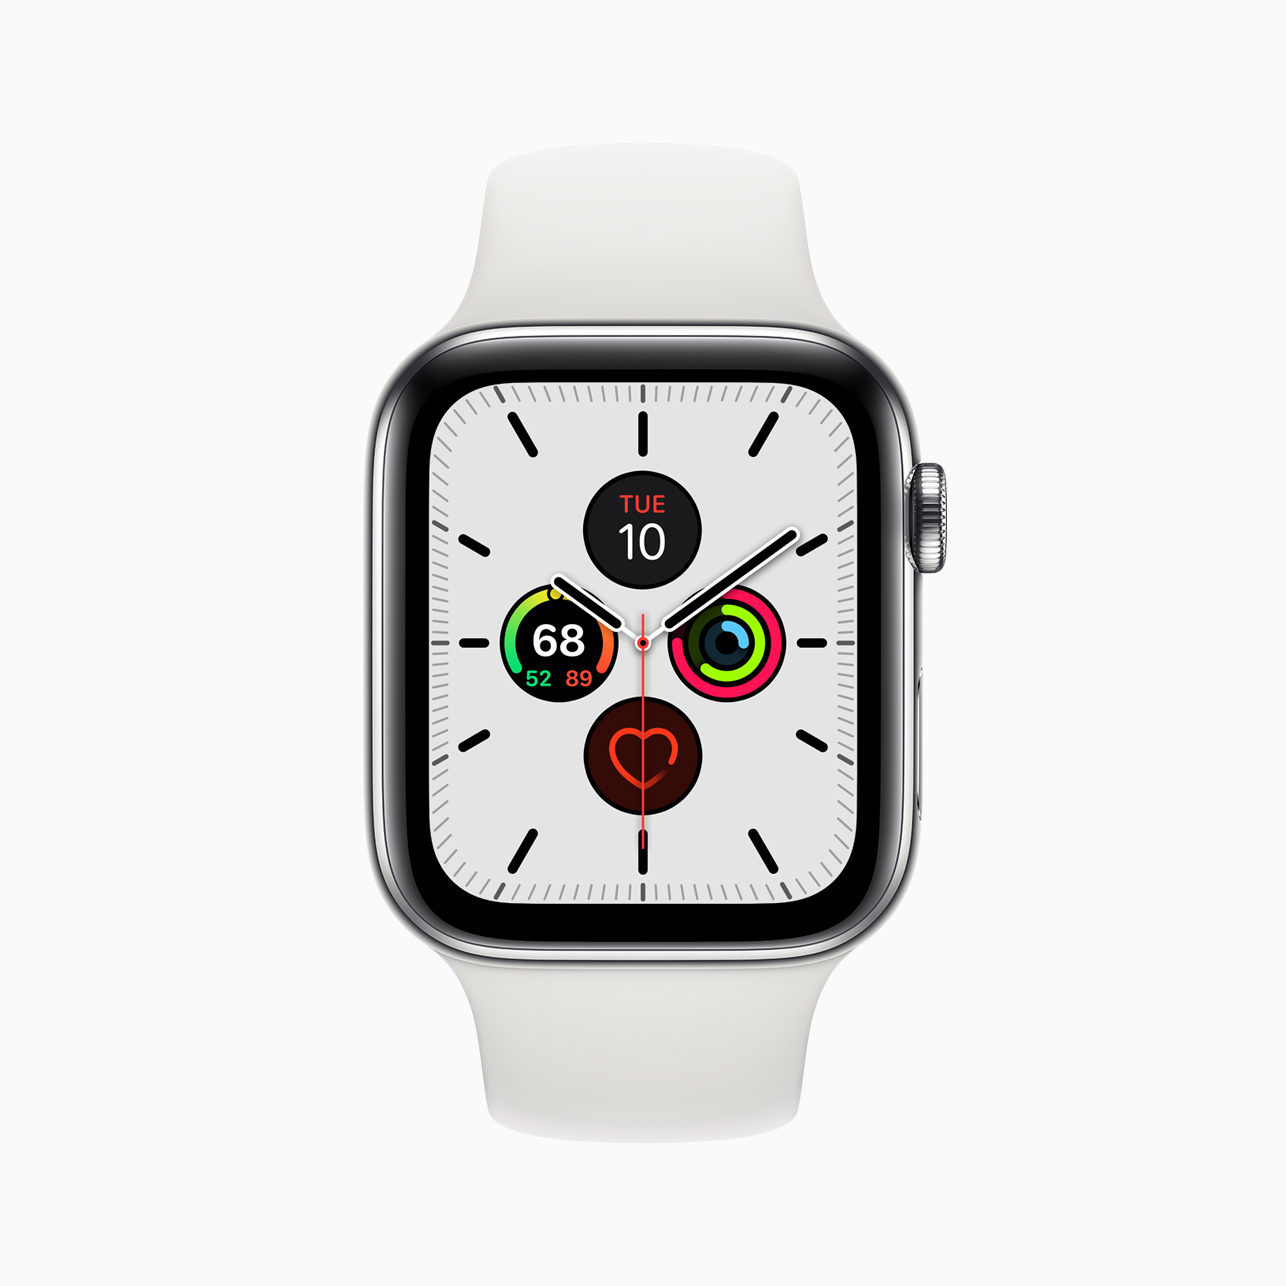 Apple Watch Series 5 Meridian Face 091019